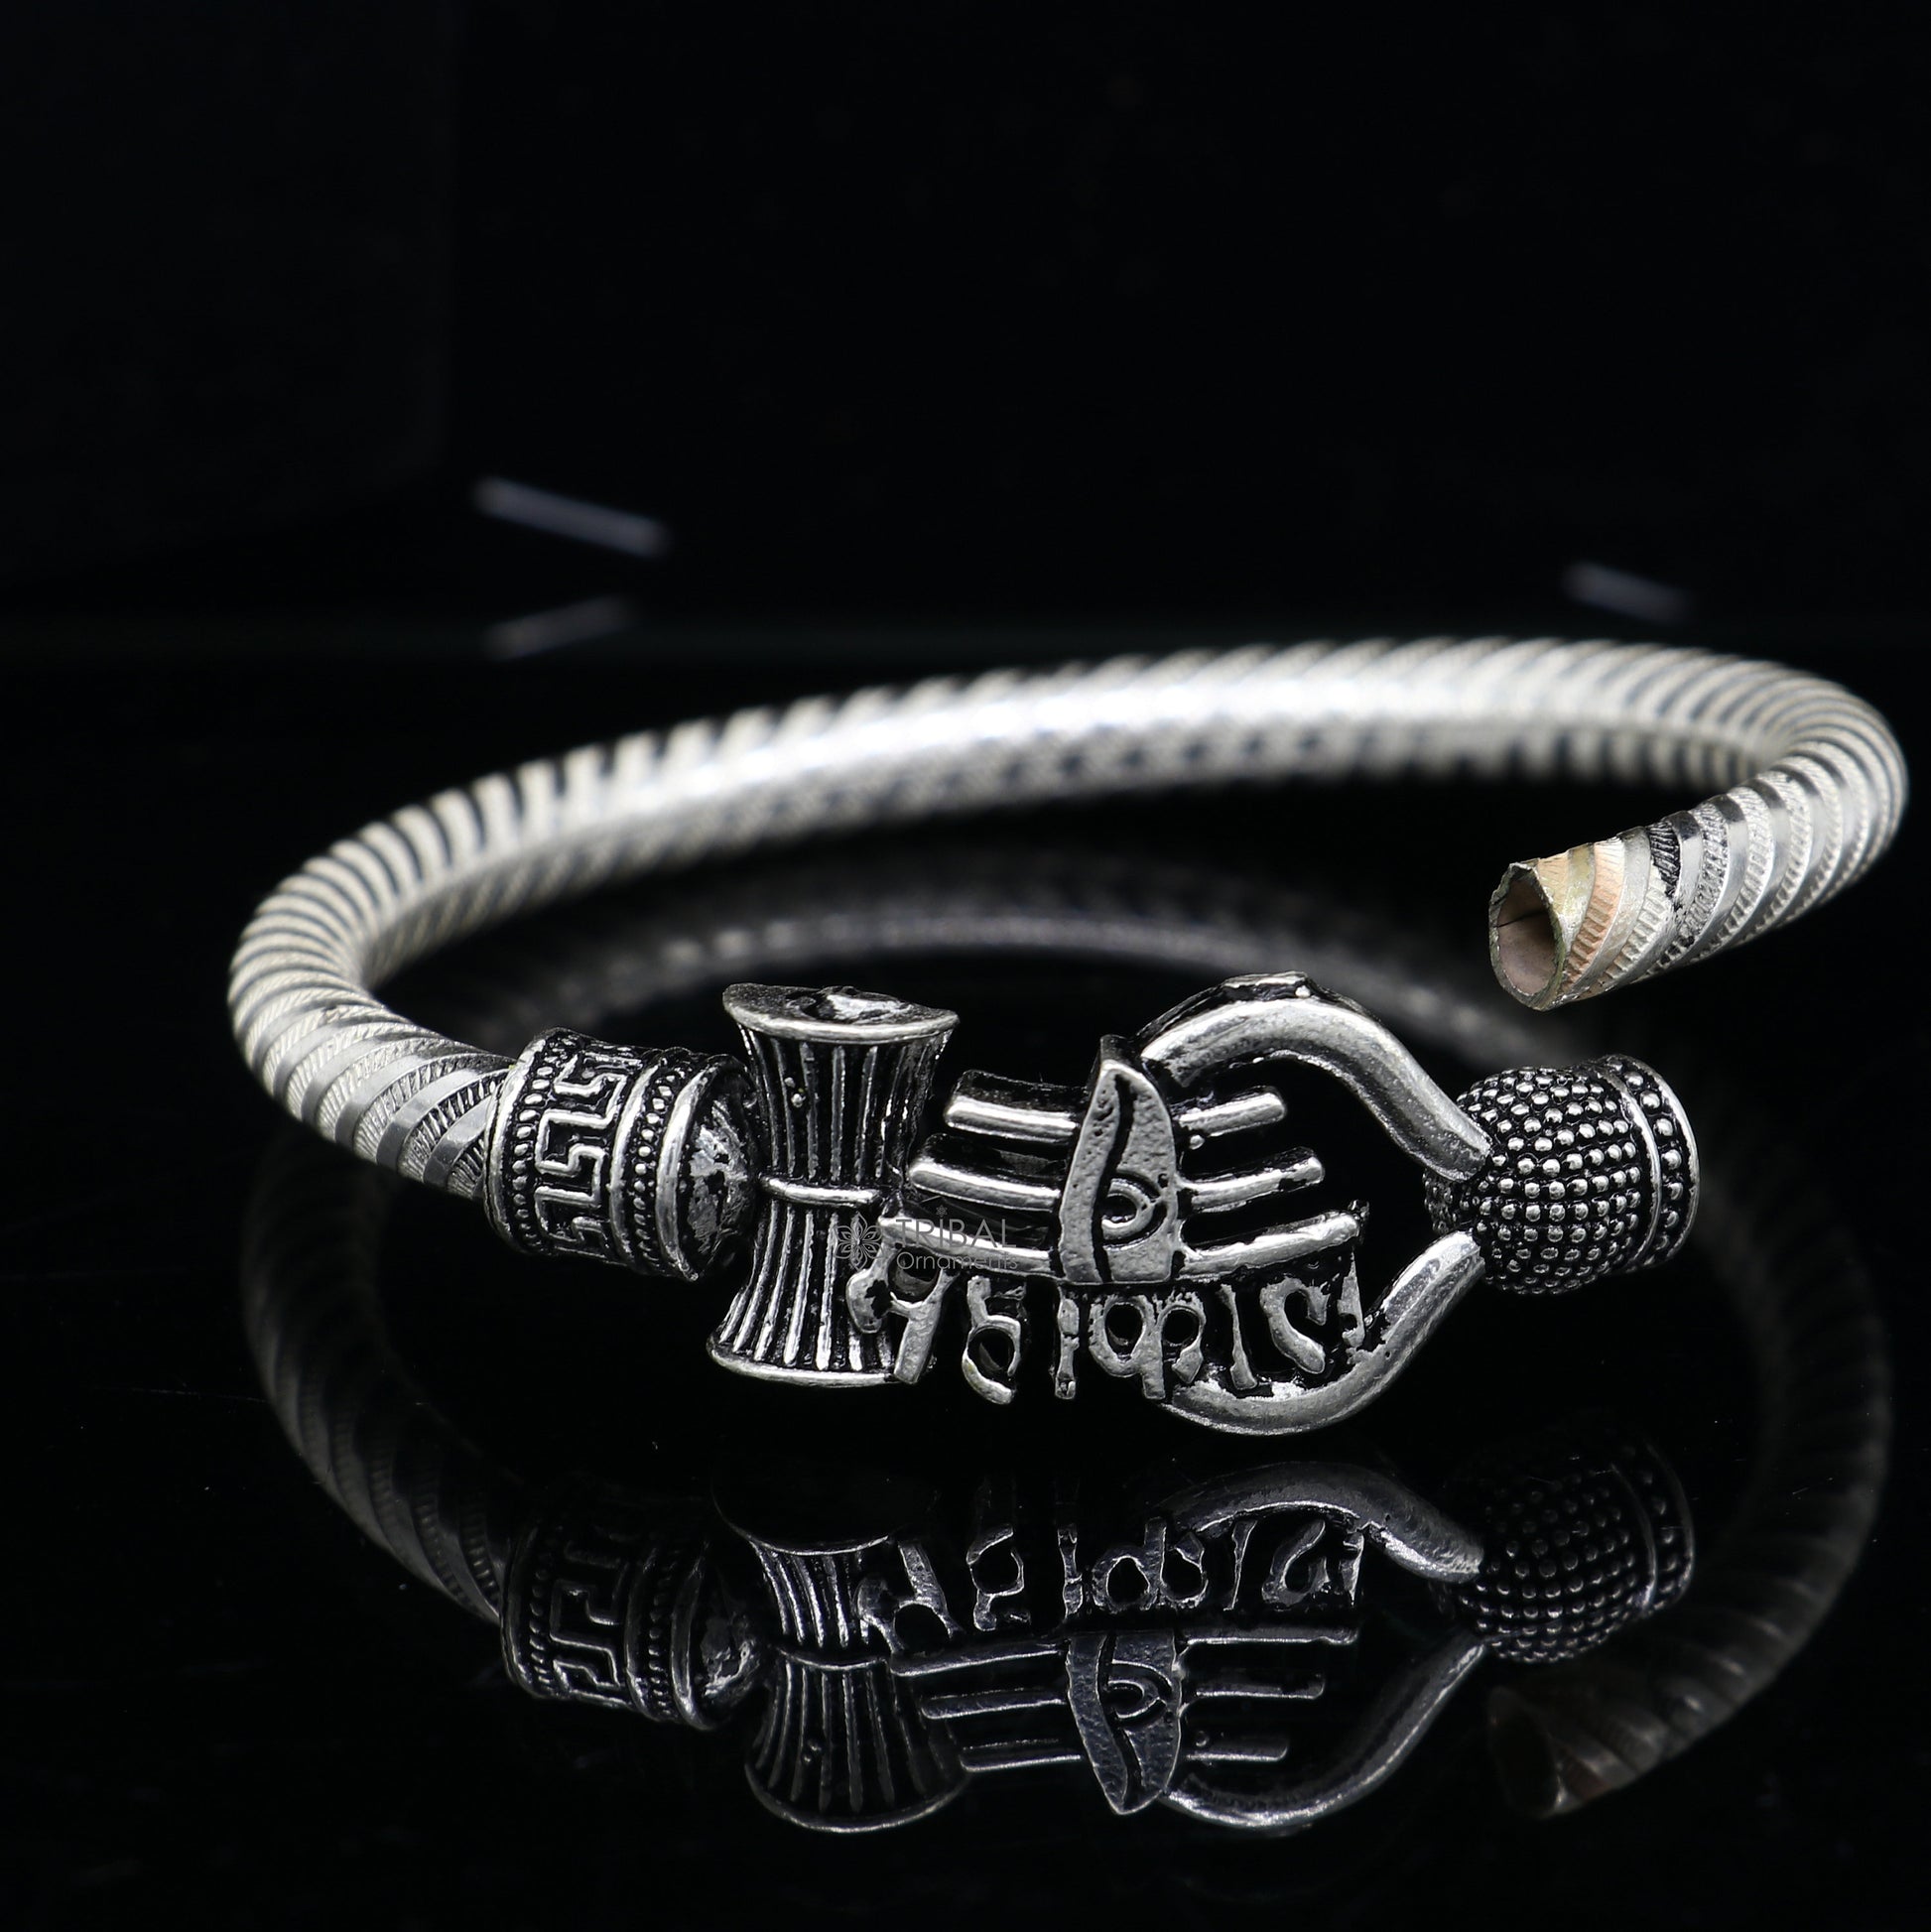 Handmade Sterling silver Lord Shiva Trident Kada Mahakal bracelet, Rudraksh bracelet, customized babhubali bangle kada giftig jewelry nsk696 - TRIBAL ORNAMENTS